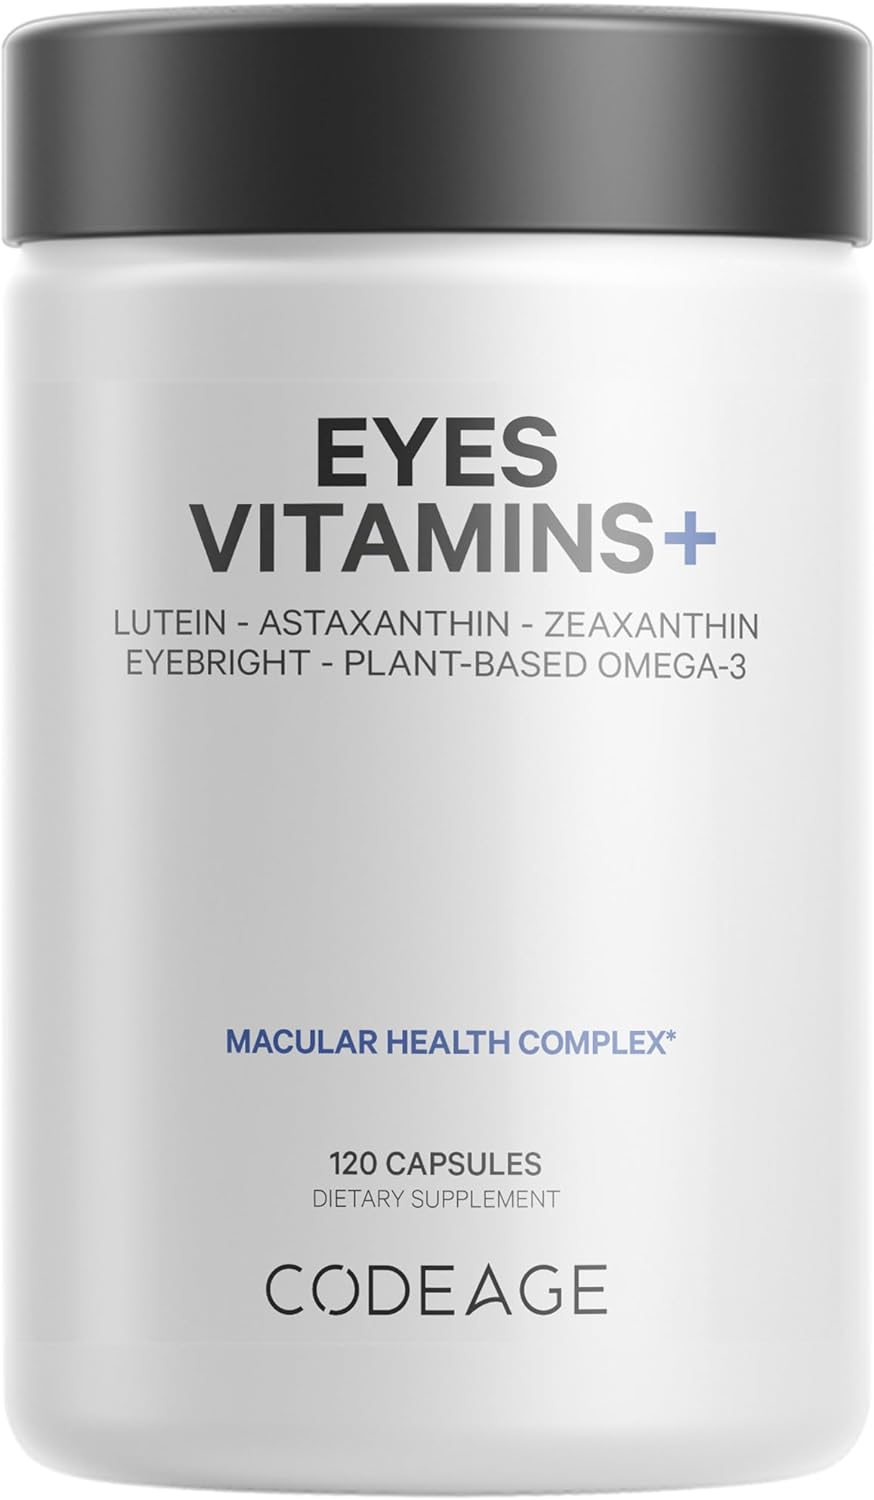 Codeage Eyes Vitamins - AREDS 2 Vitamins Formula Supplement - Astaxant